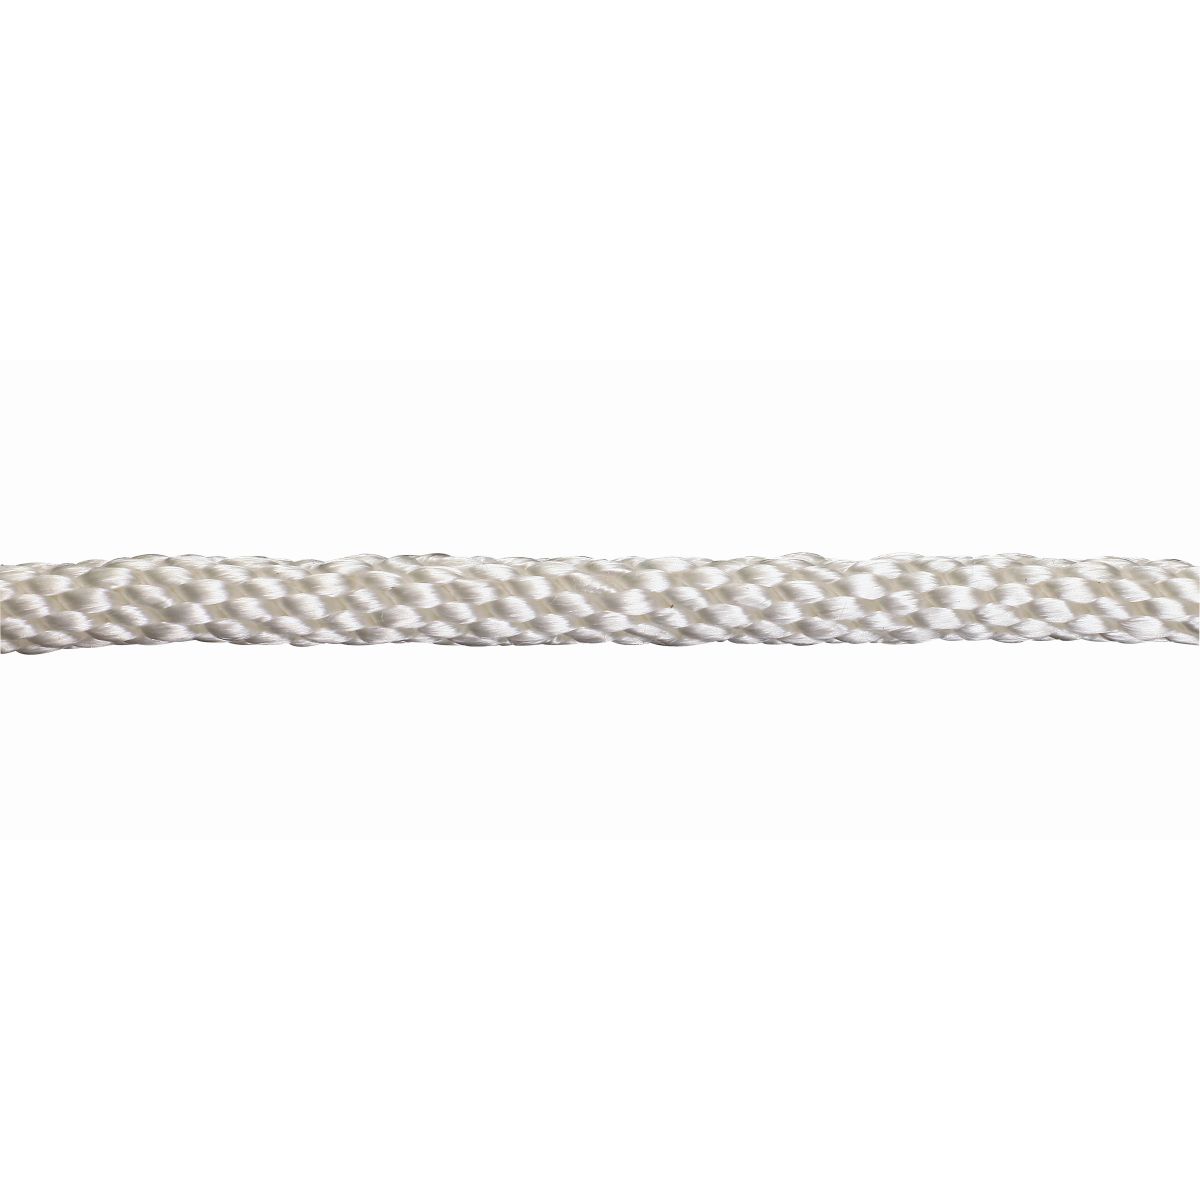 5/16" Solid Braid Nylon Rope